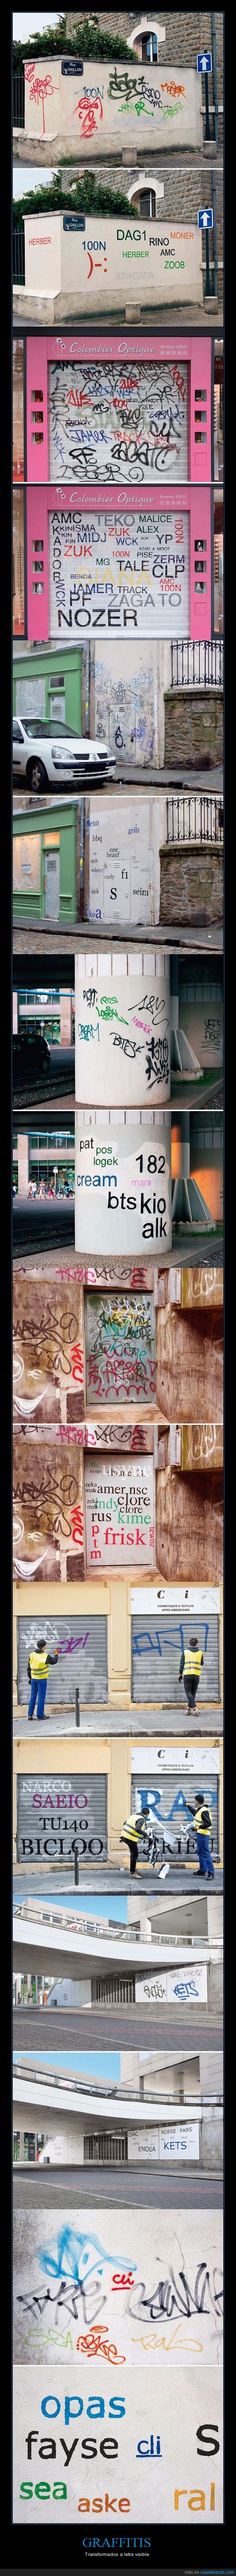 graffiti,pared,letra,carteles,frases